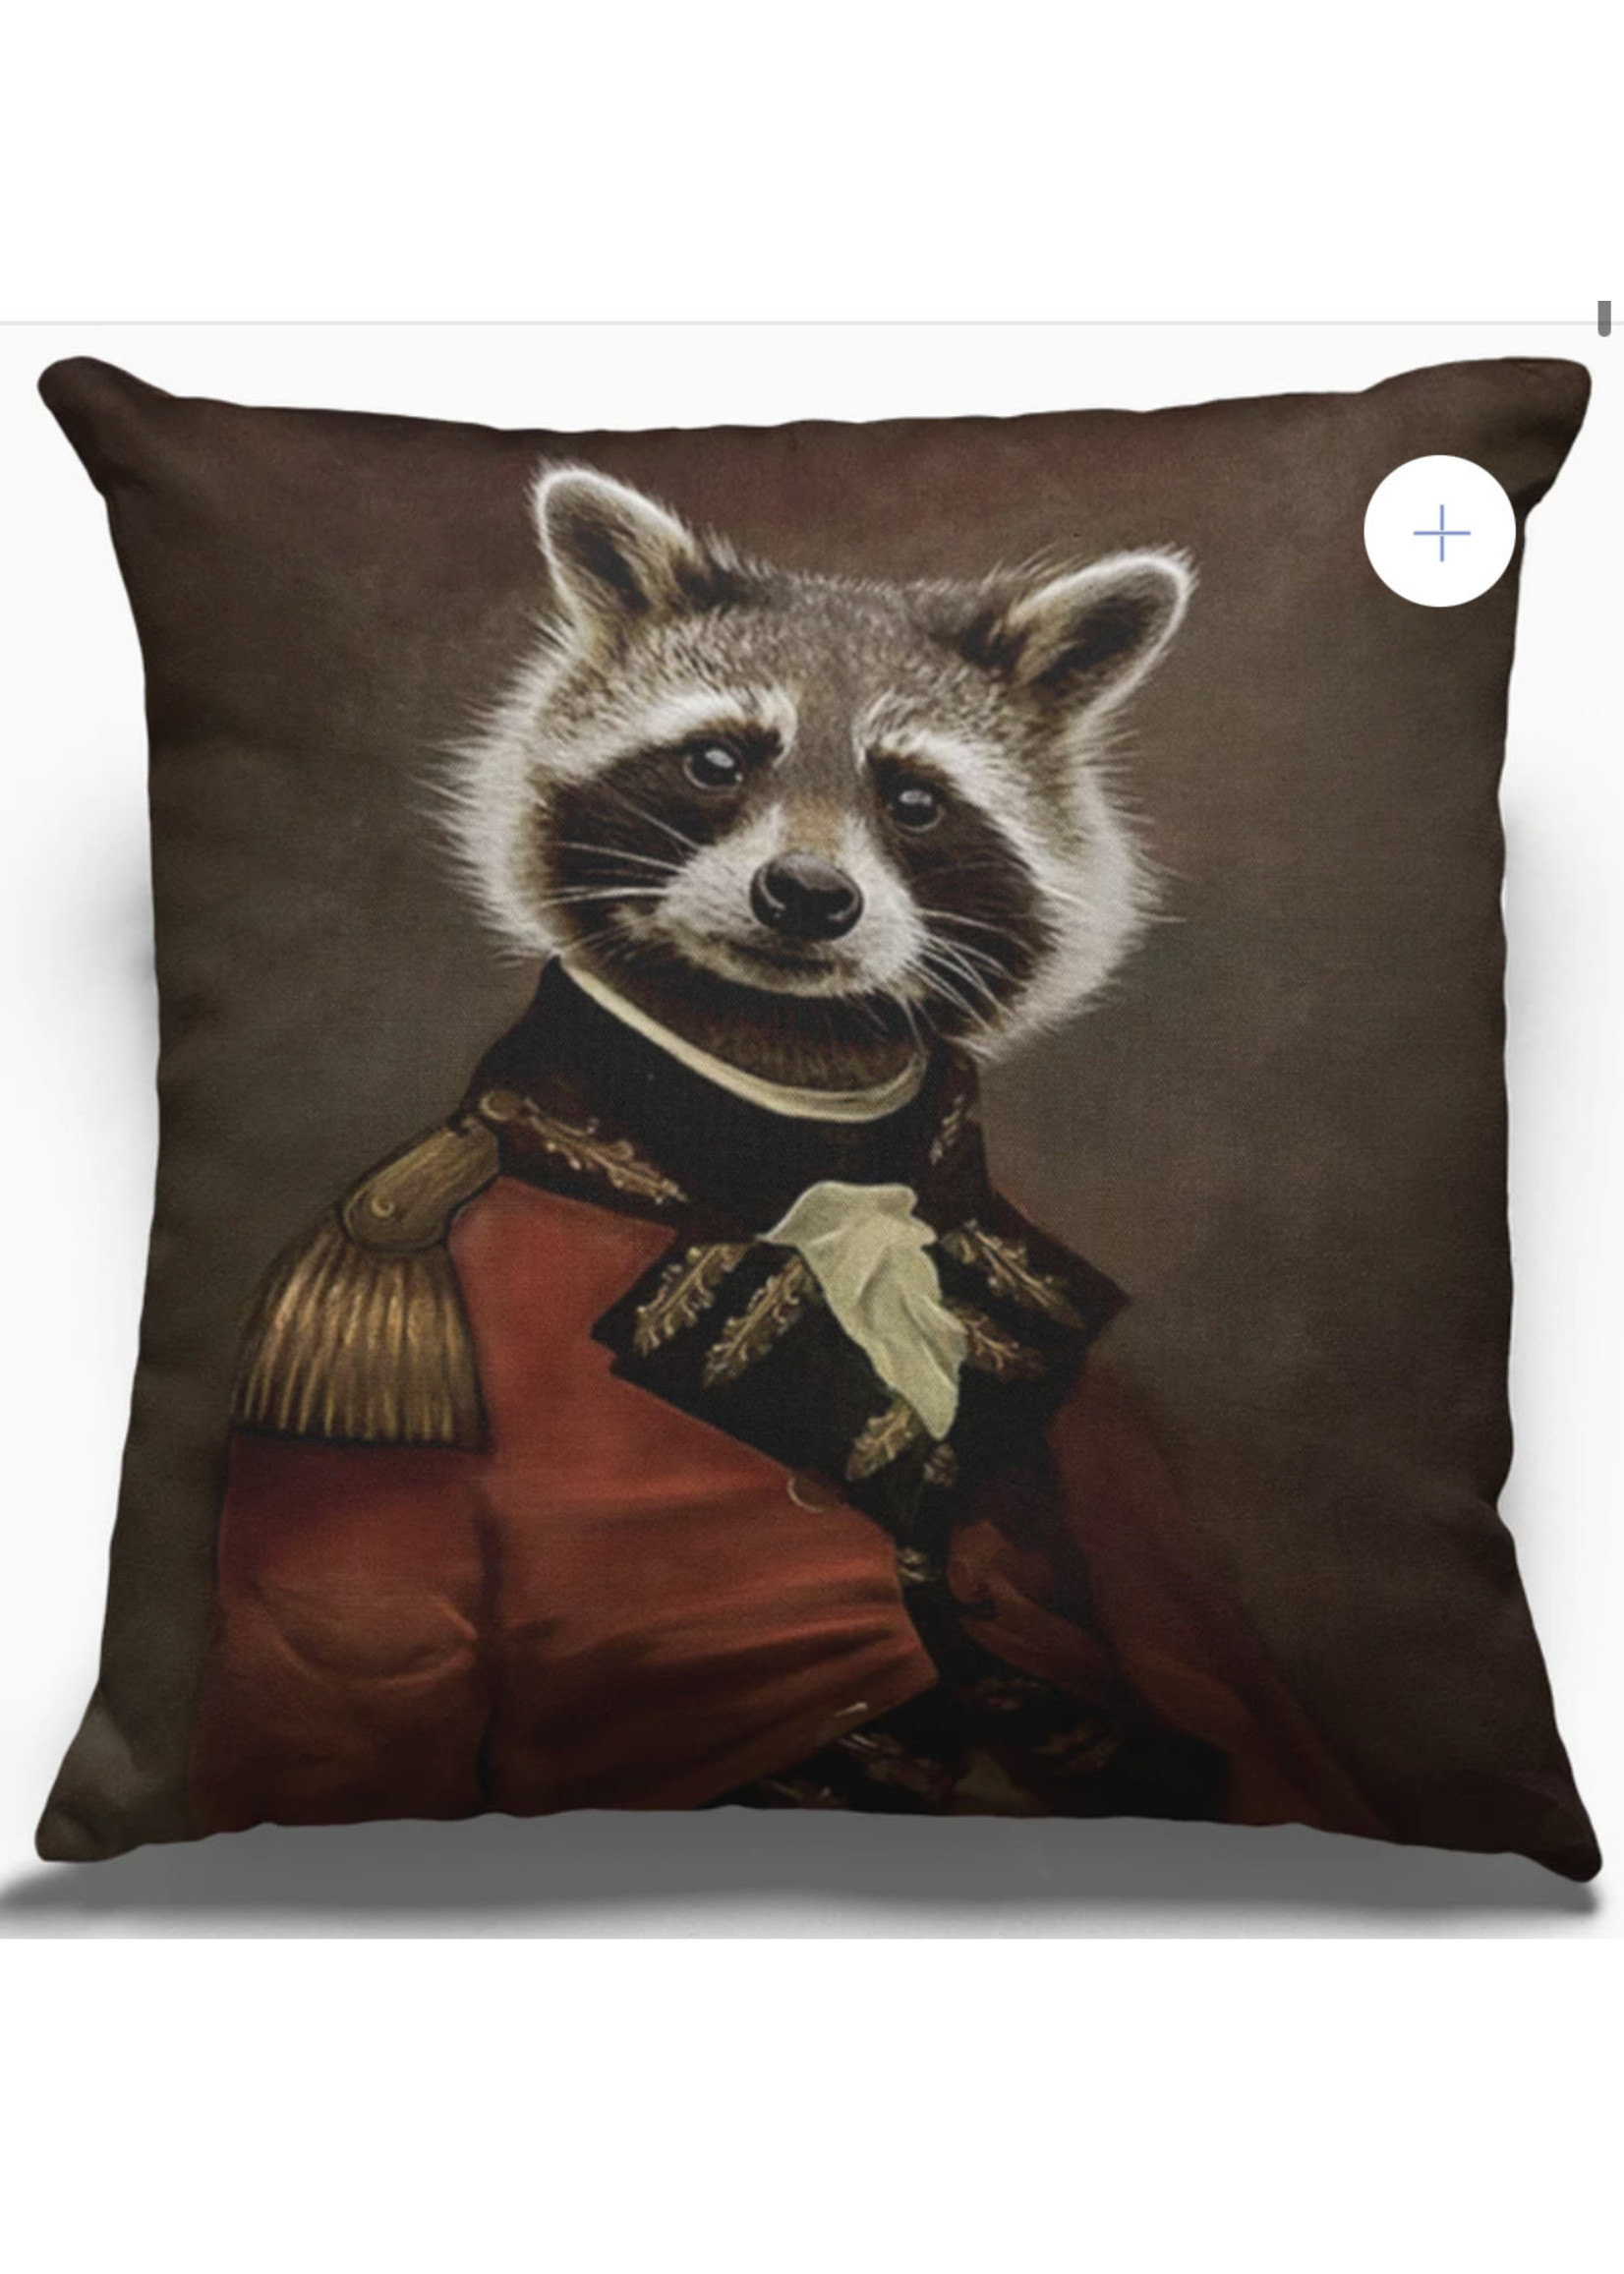 Moderny Sovereign Series Pillows - Raccoon